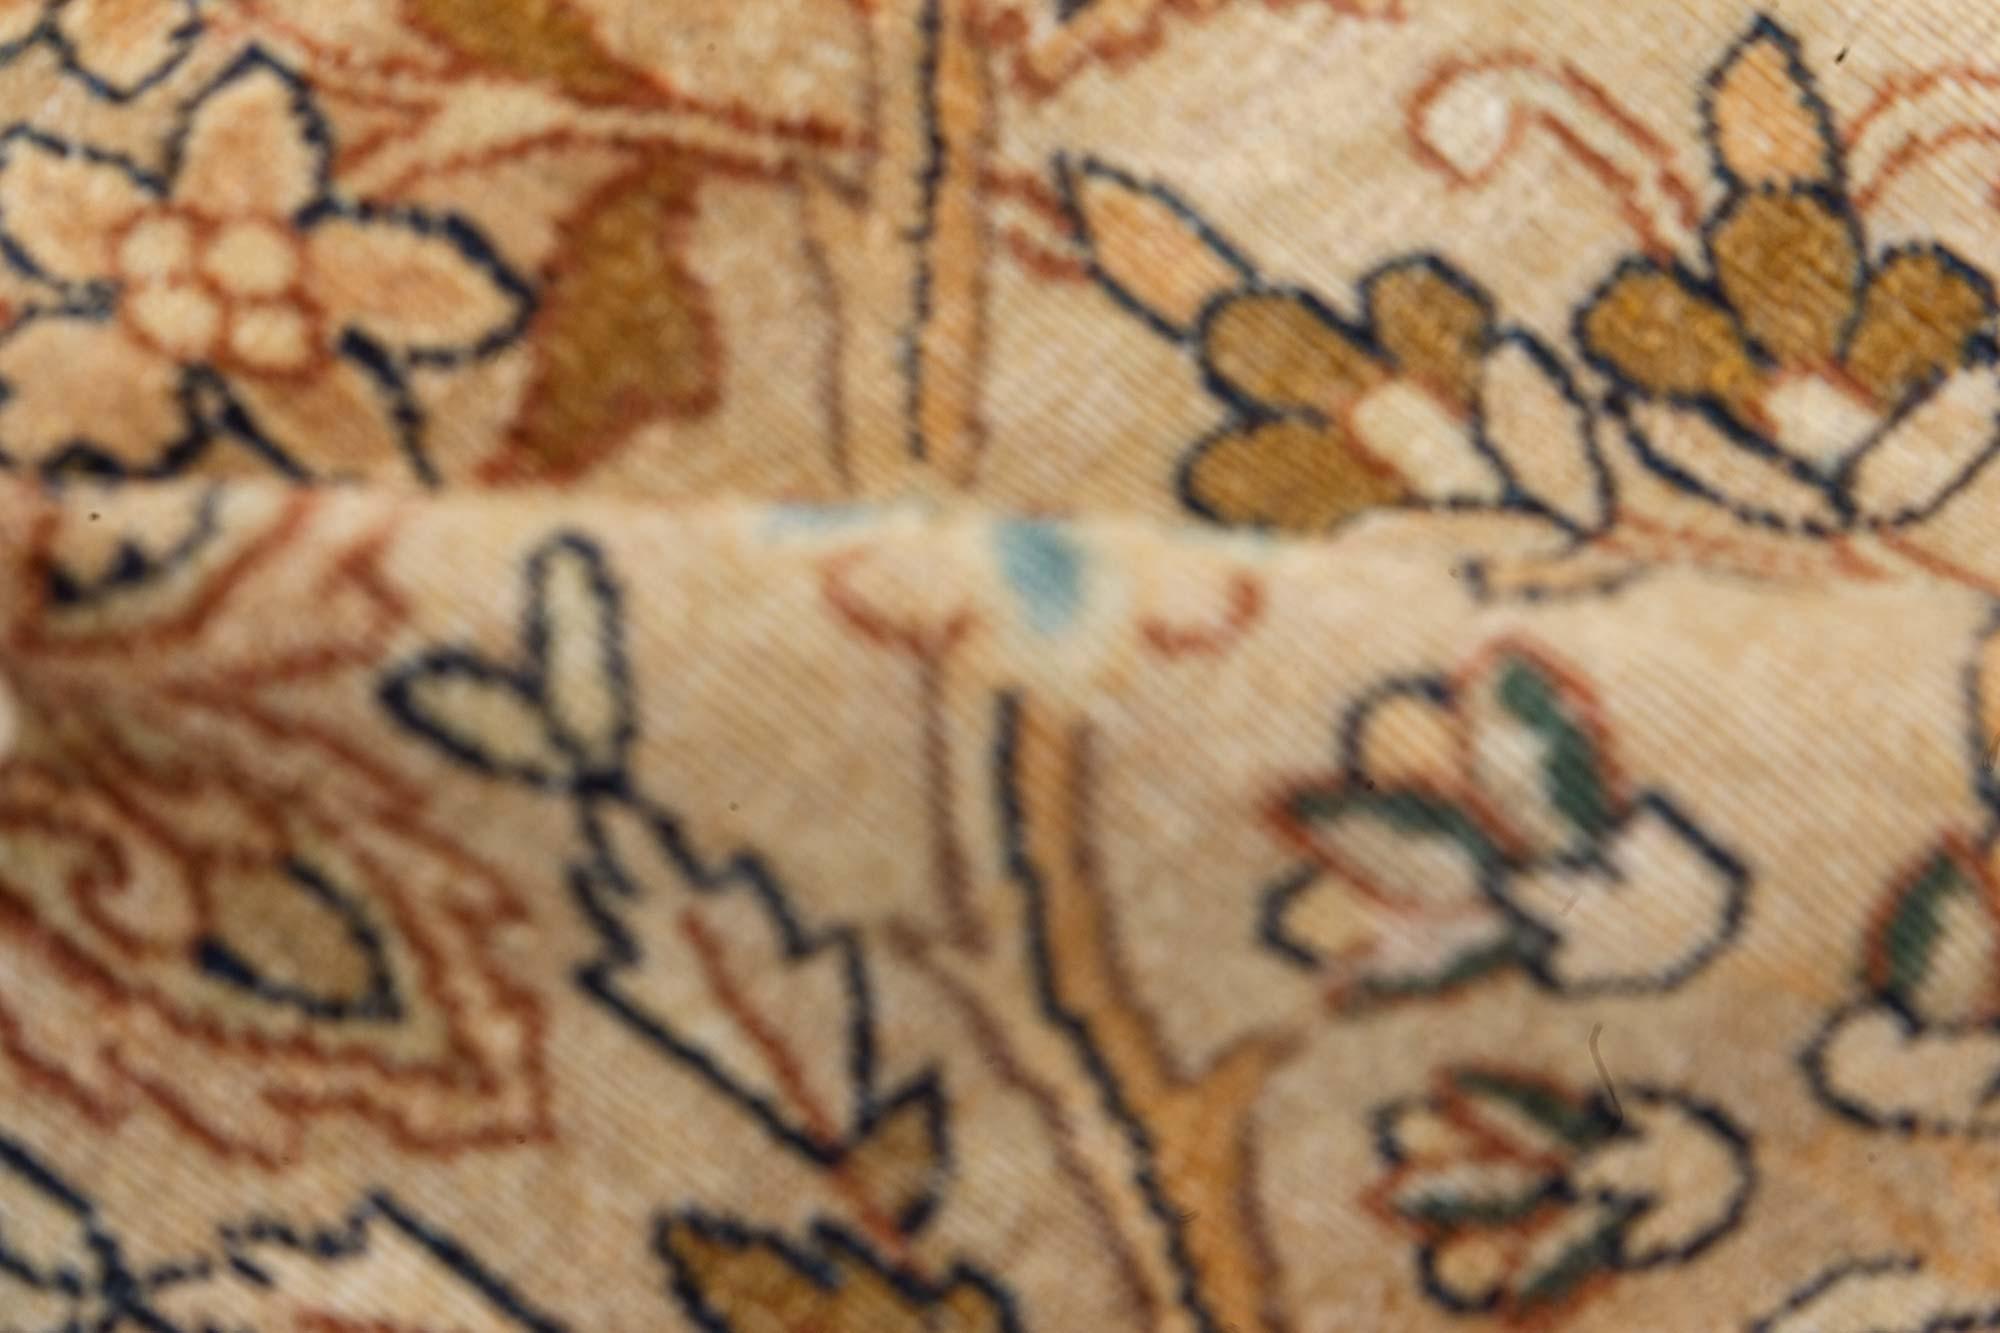 Early 20th century Persian Kirman botanic handmade wool rug
Size: 9'7